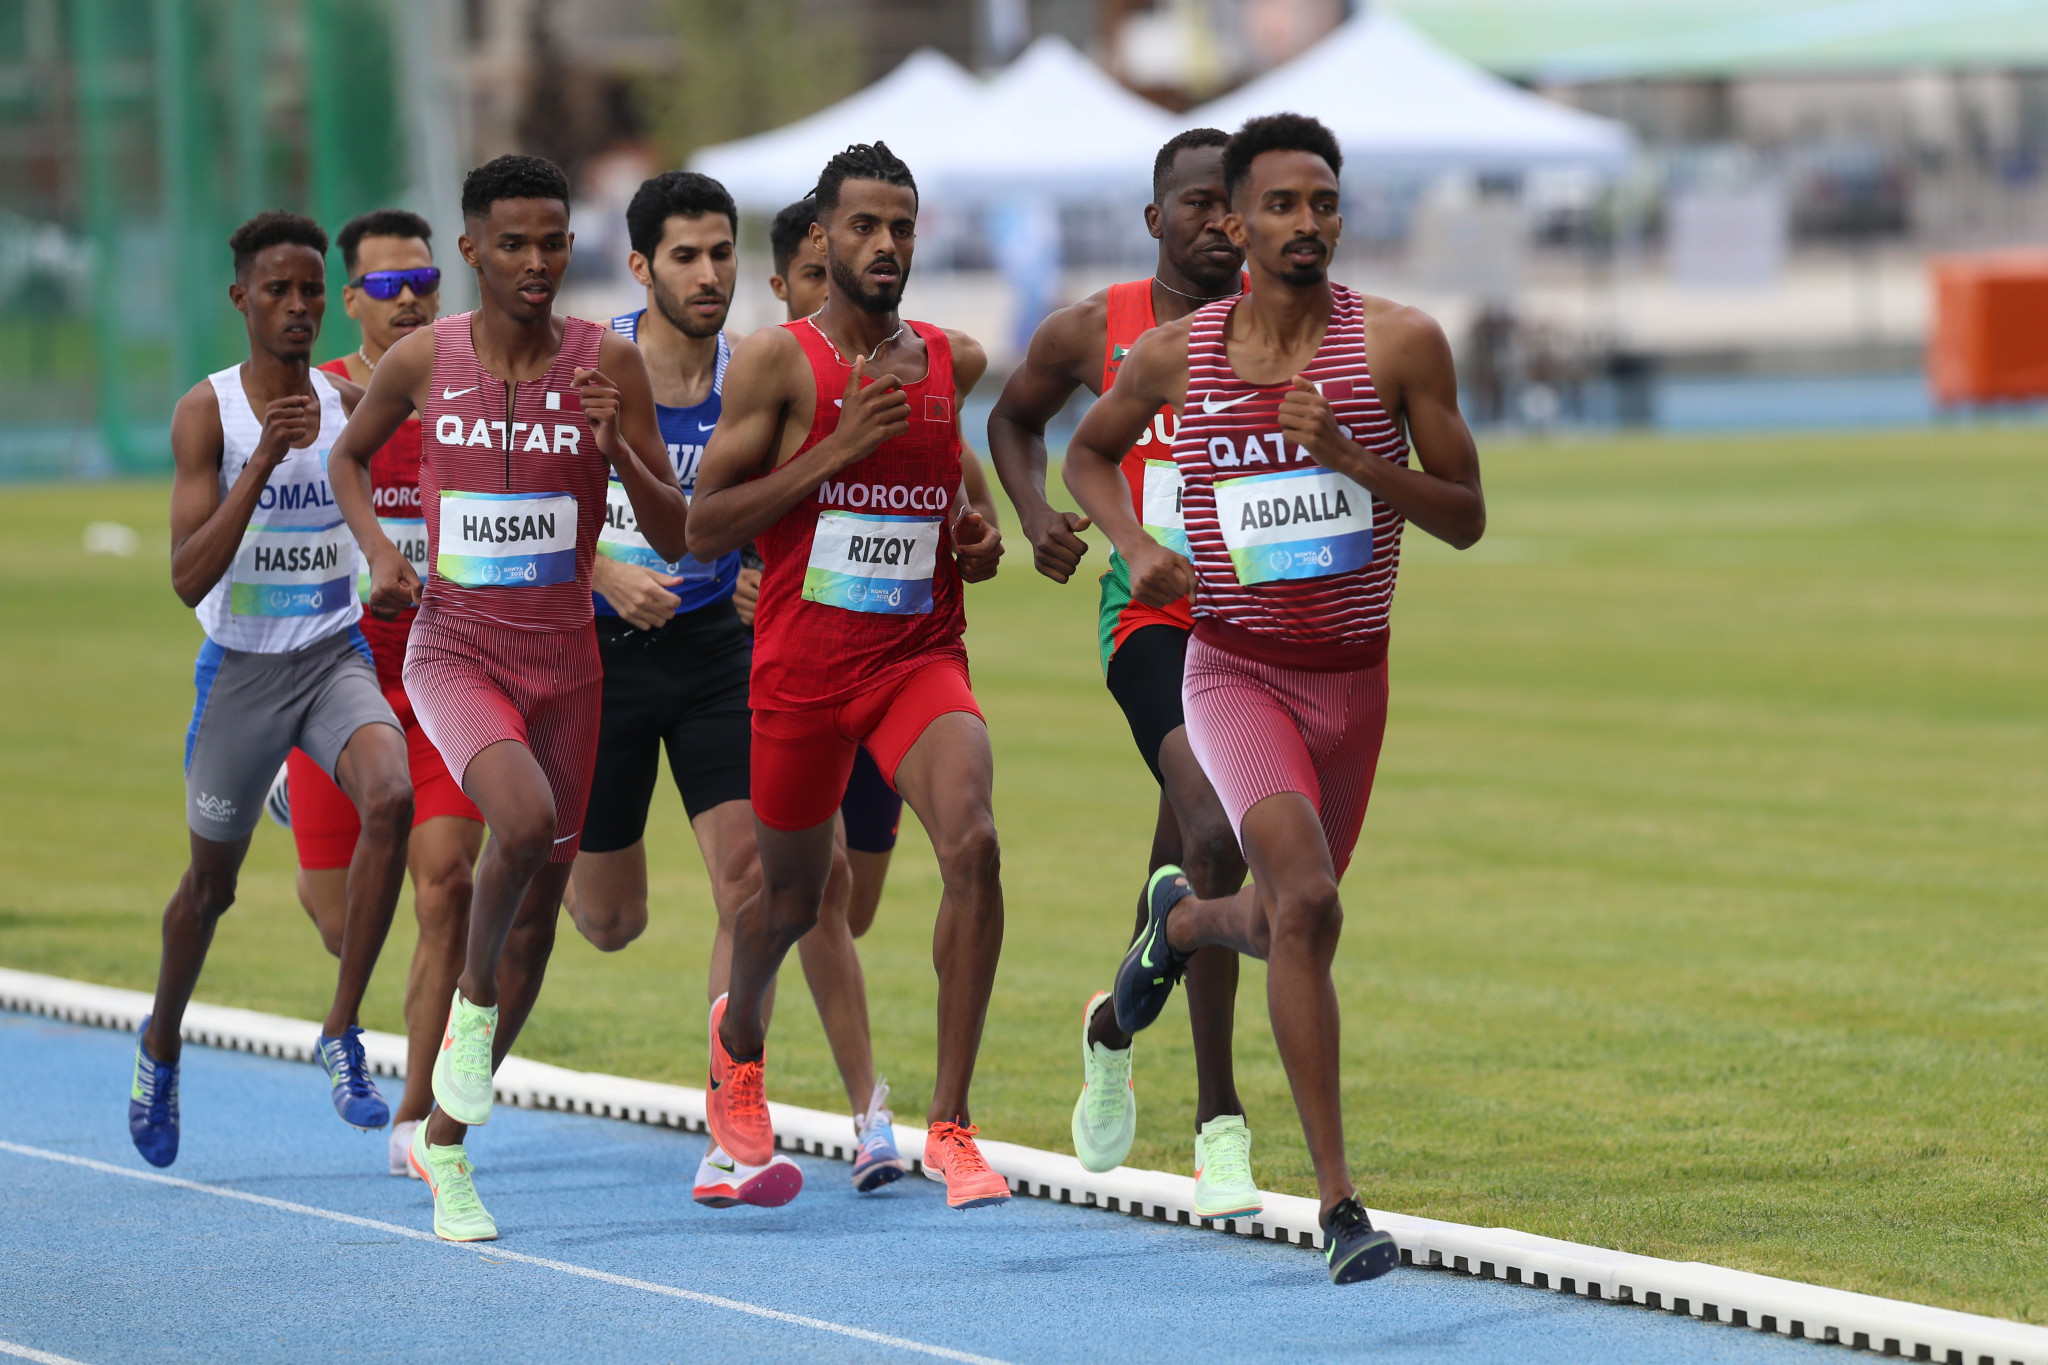 Qatar’s Abubaker Haydar Abdalla was in control as he won men's 800m gold ©Konya2021